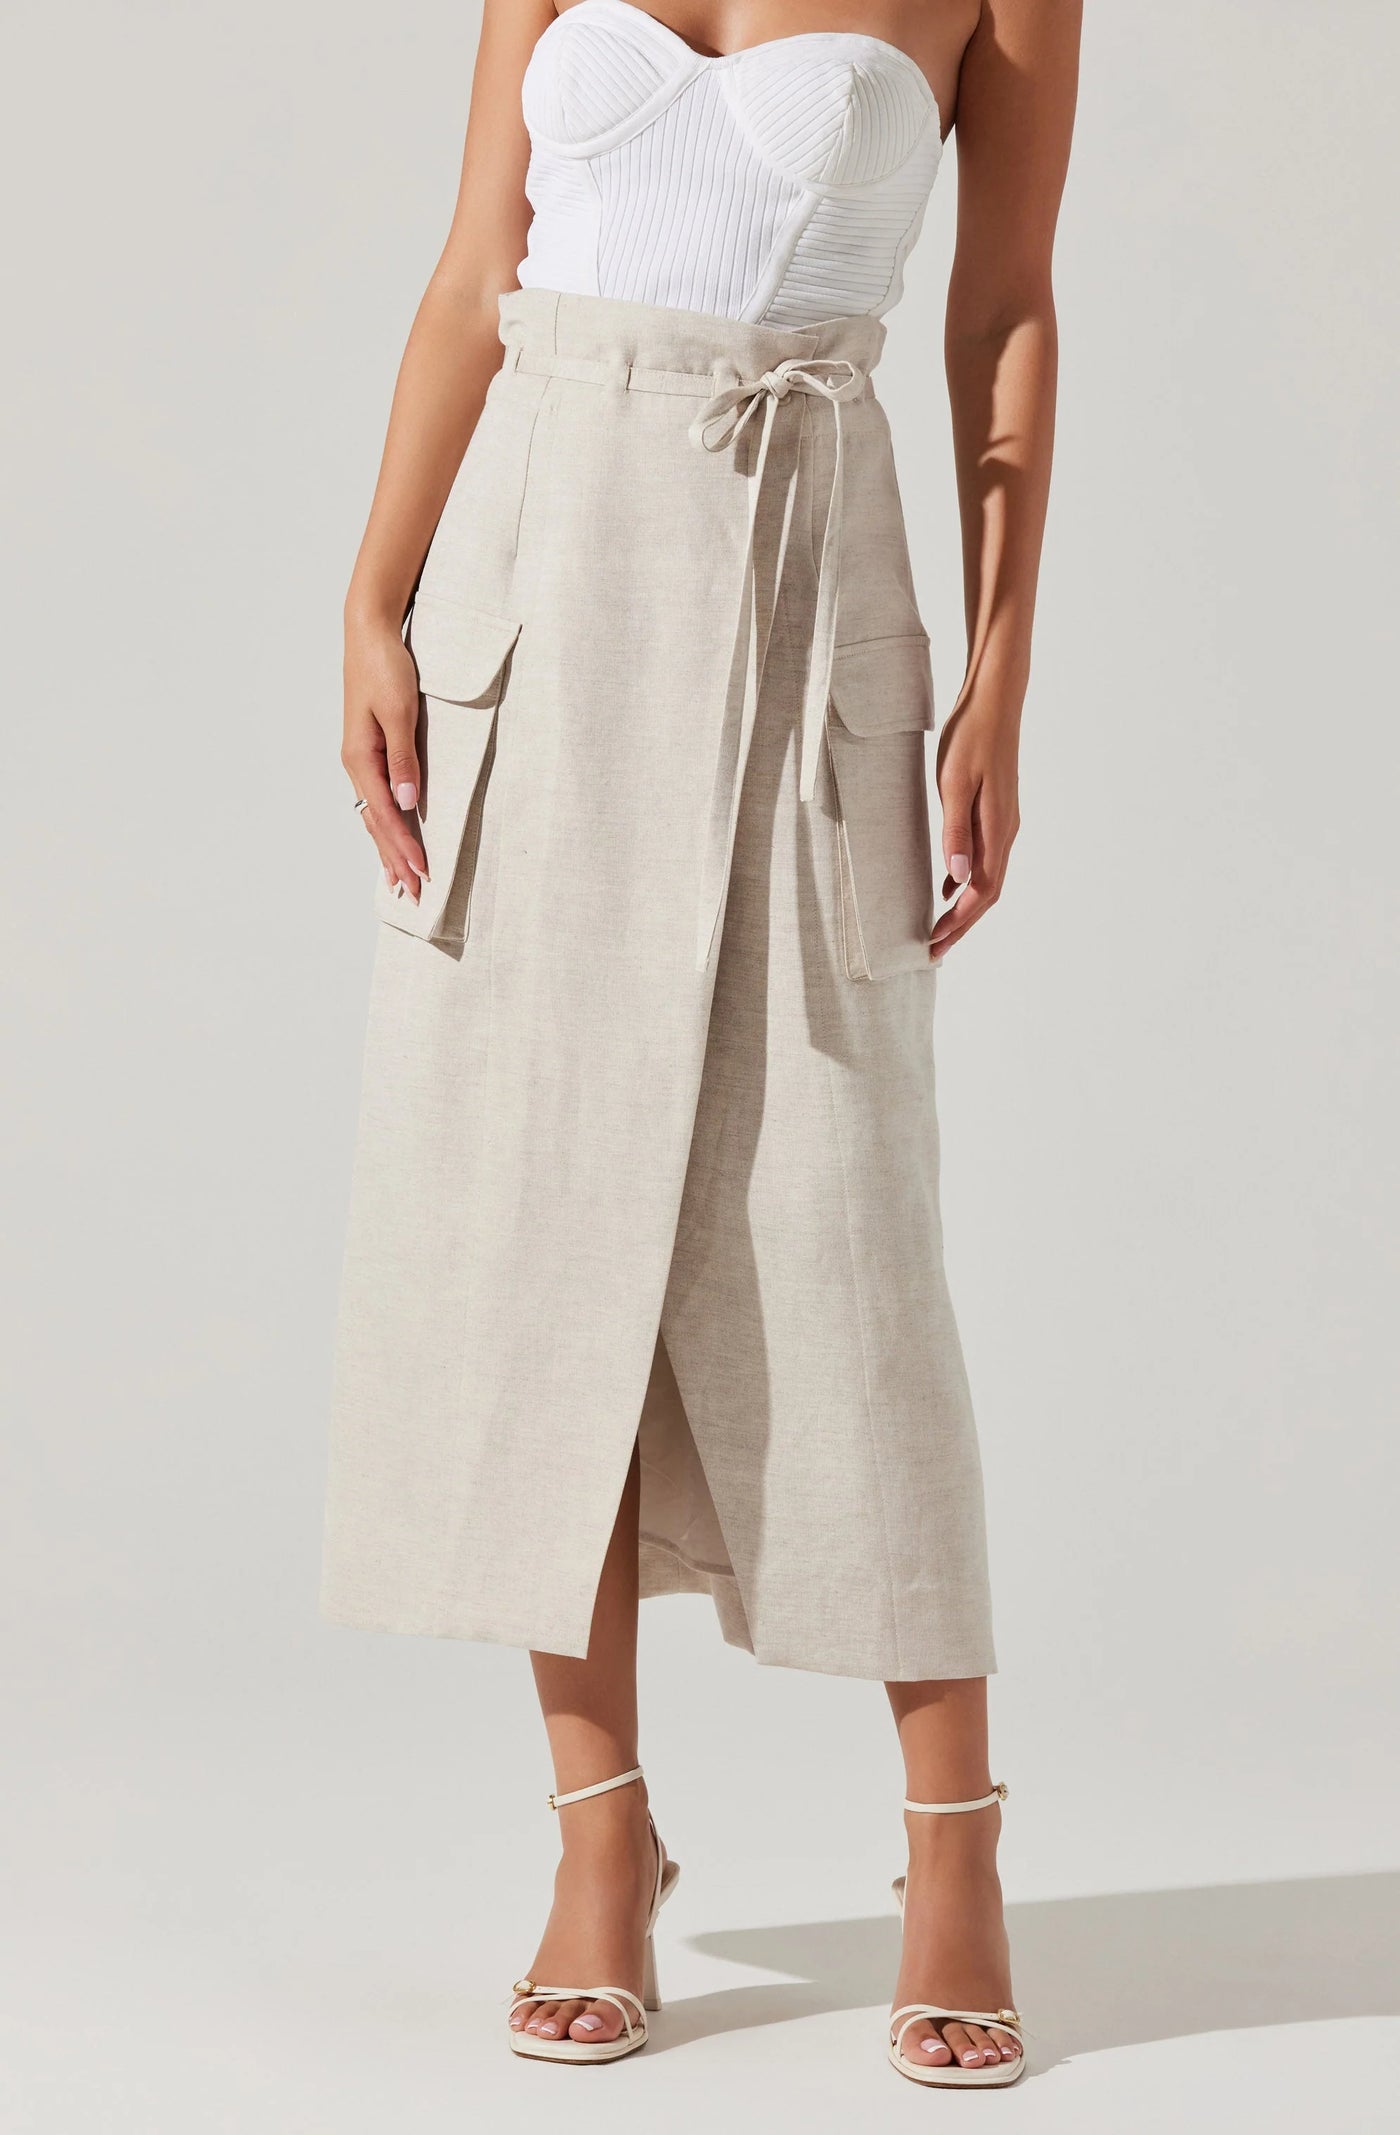 Nara Beige Skirt